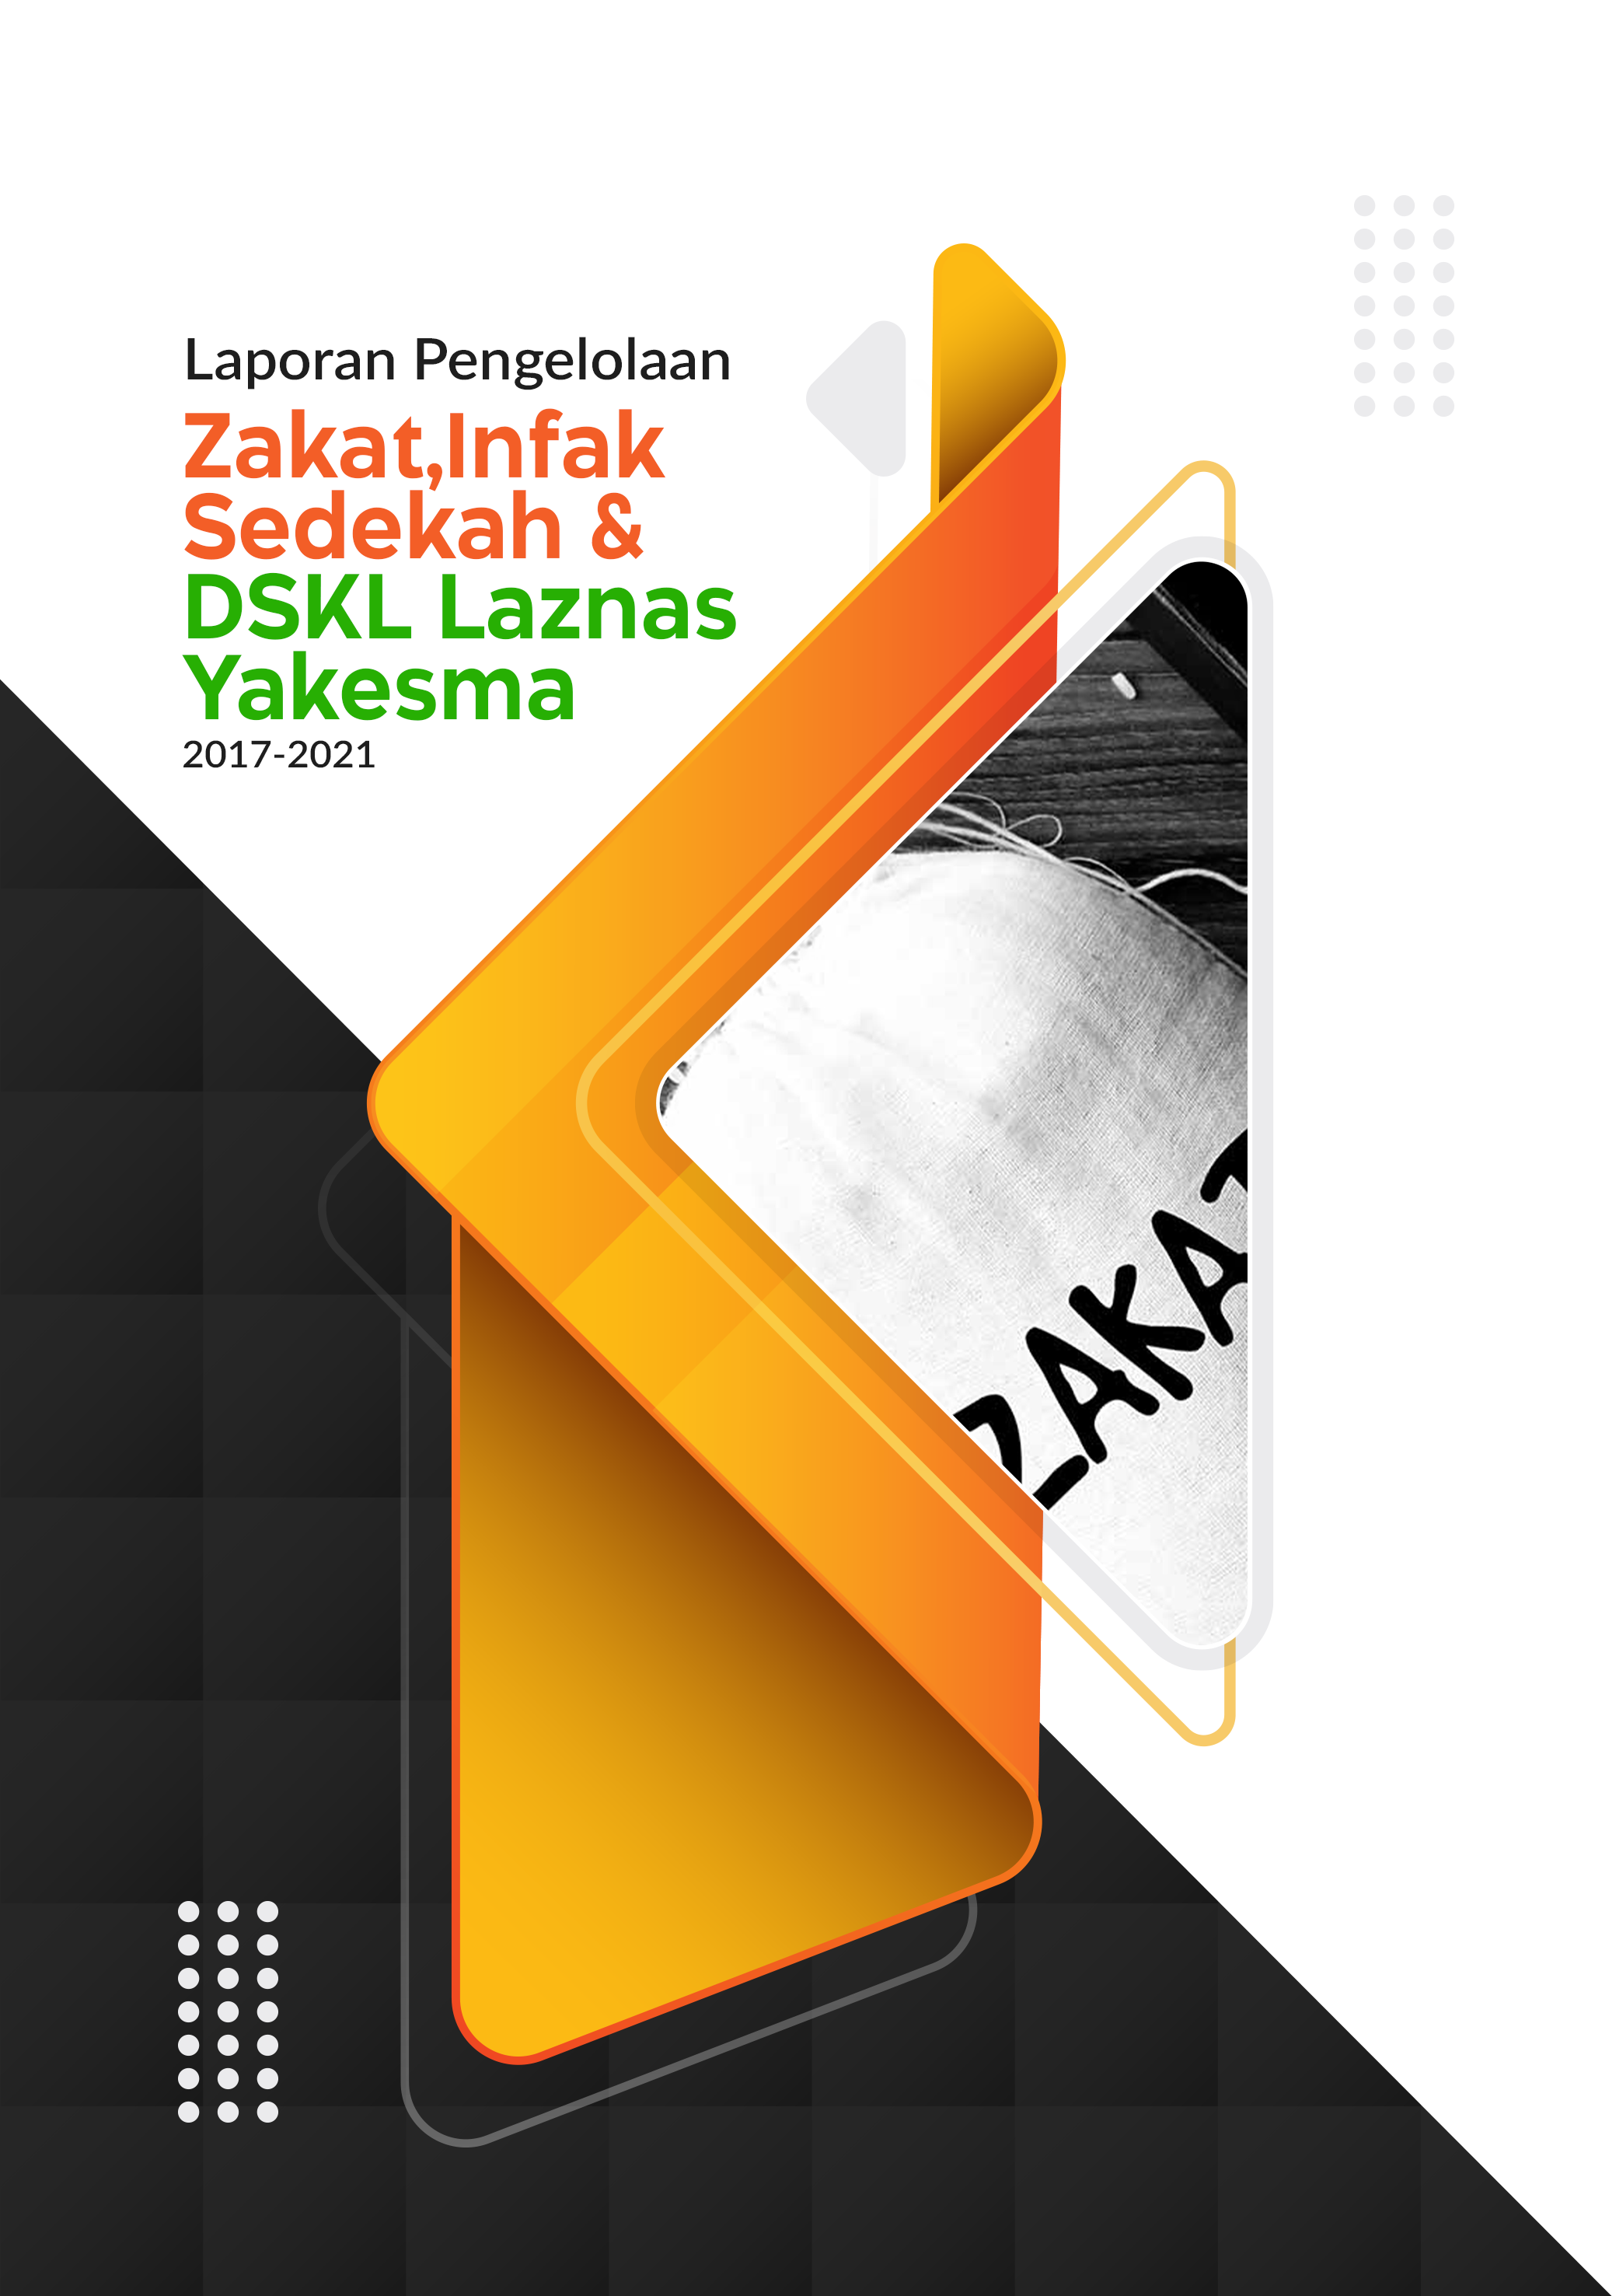 Laporan Pengelolaan Zakat, Infak, Sedekah & DSKL Laznas Yakesma 2017-2021